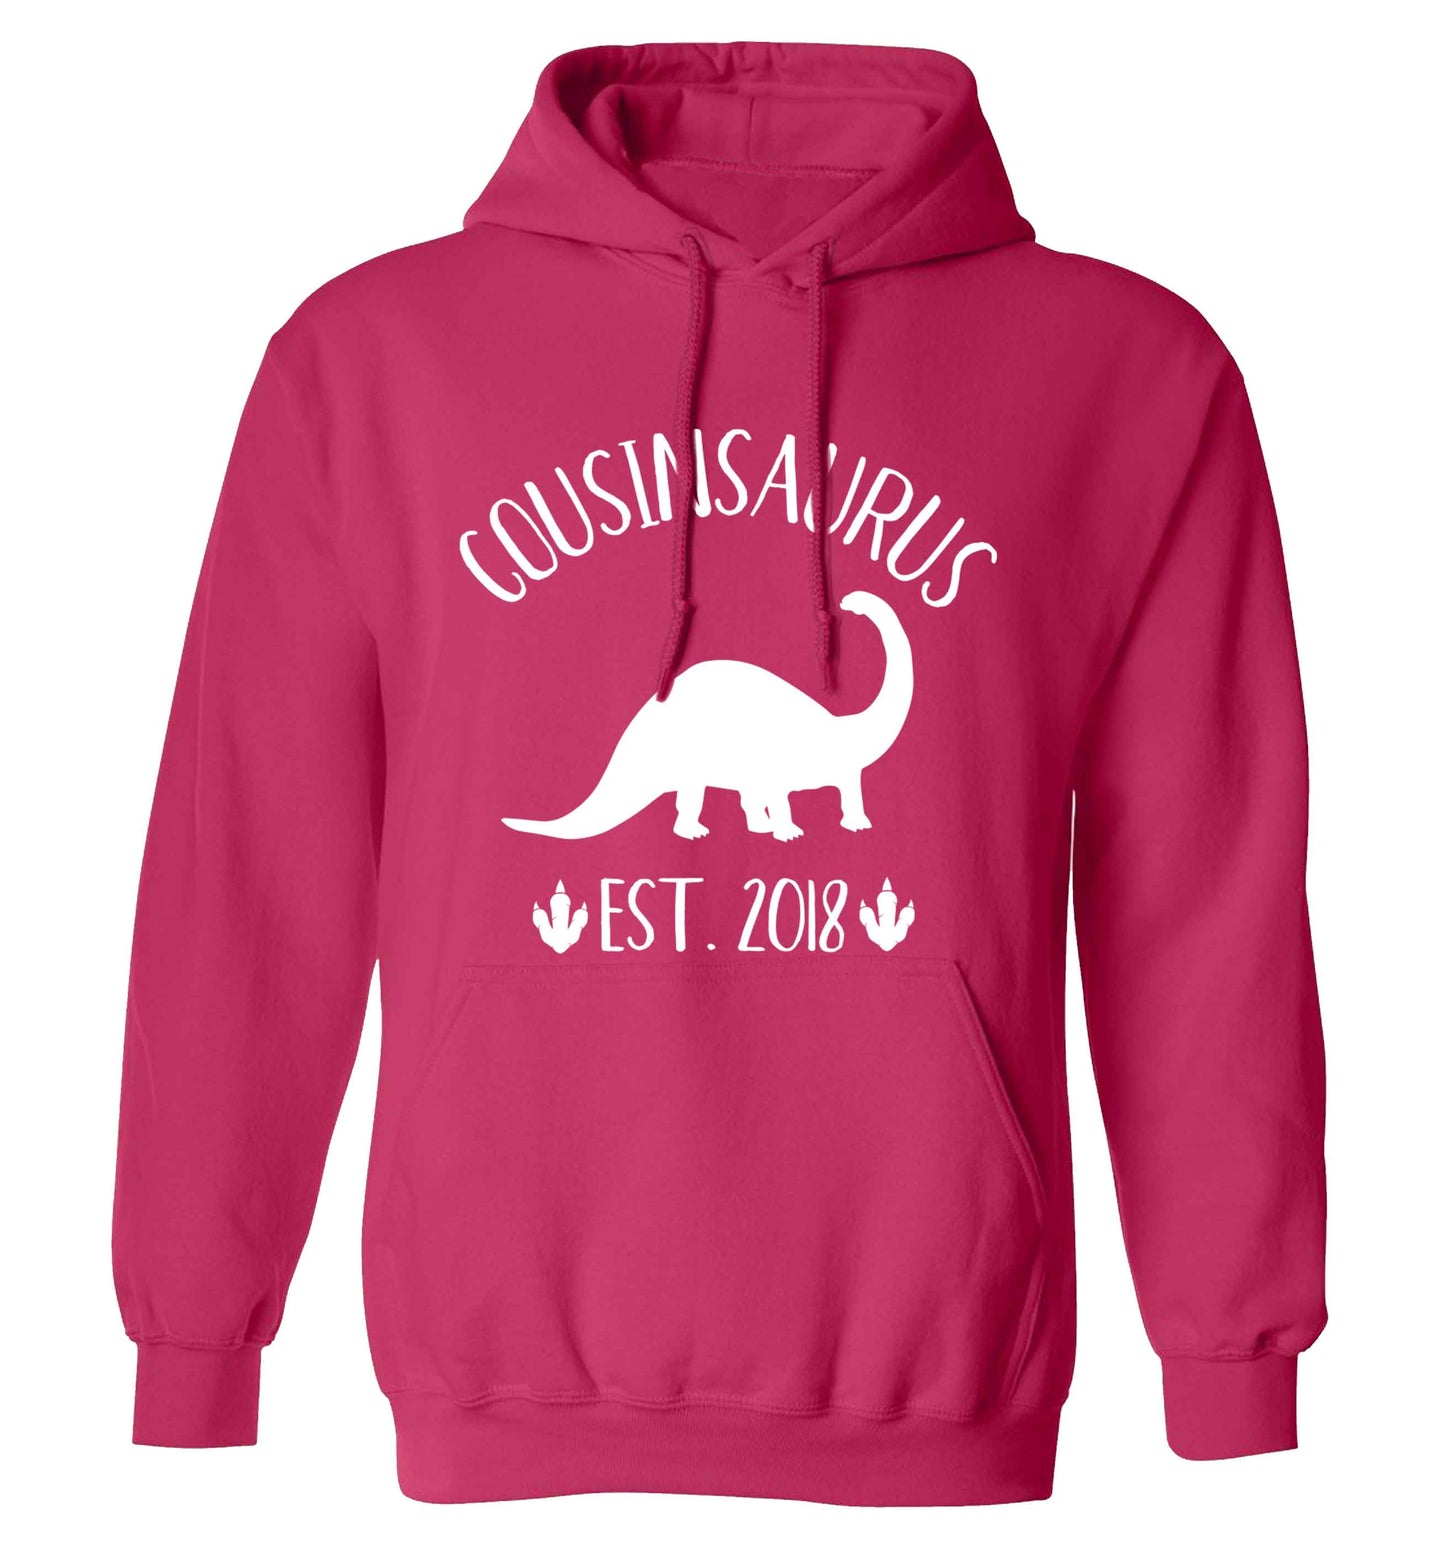 Personalised cousinsaurus since (custom date) adults unisex pink hoodie 2XL